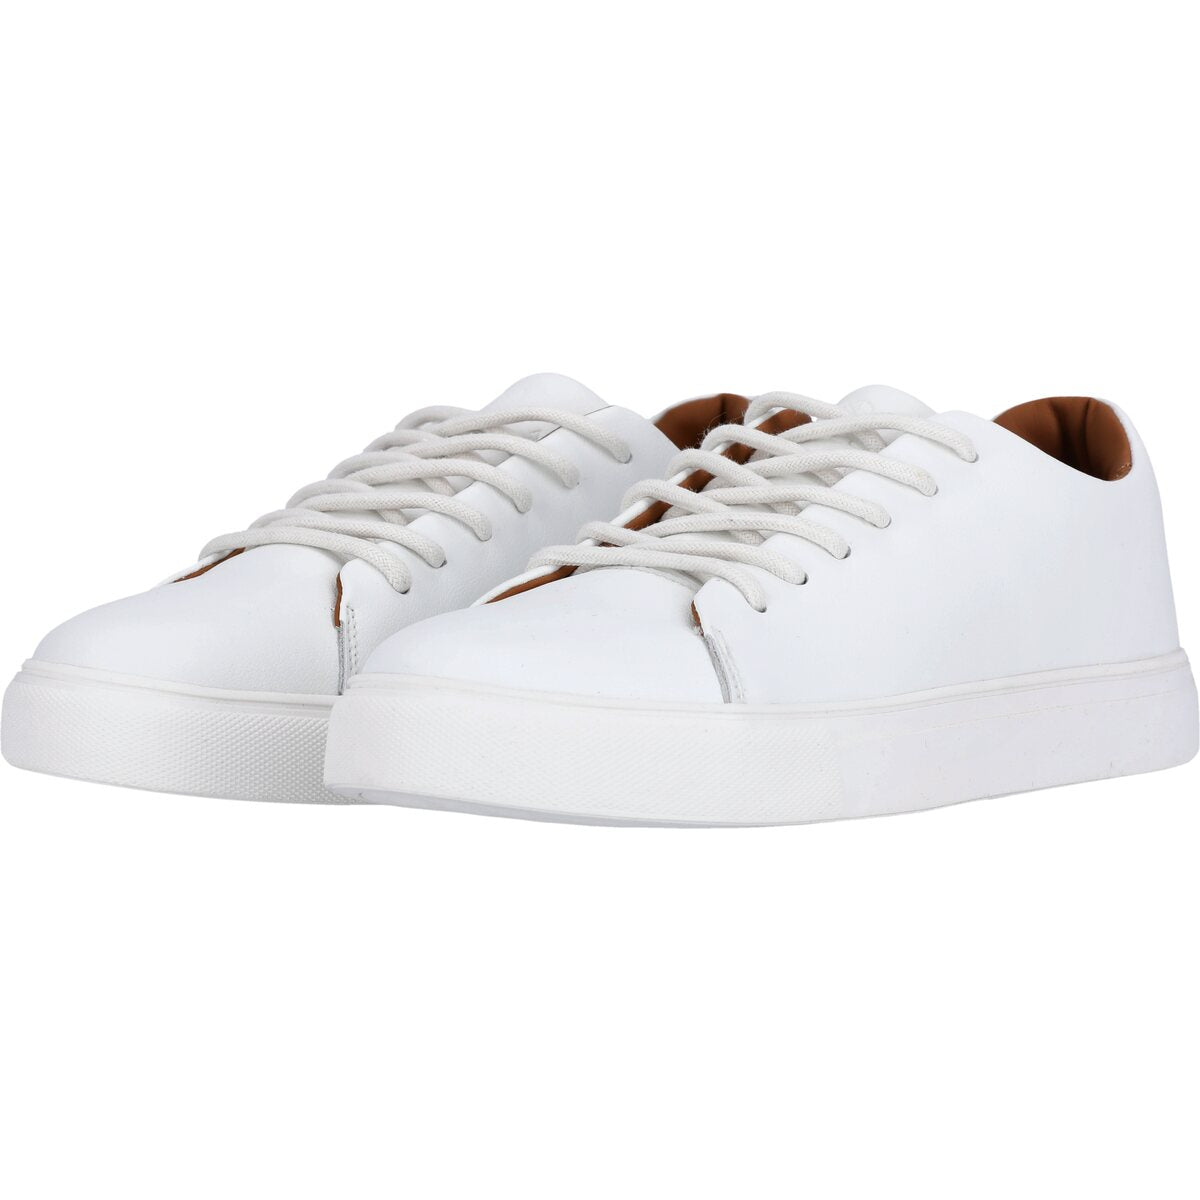 Athlecia Christinia Classic Sneakers - White 1 Shaws Department Stores